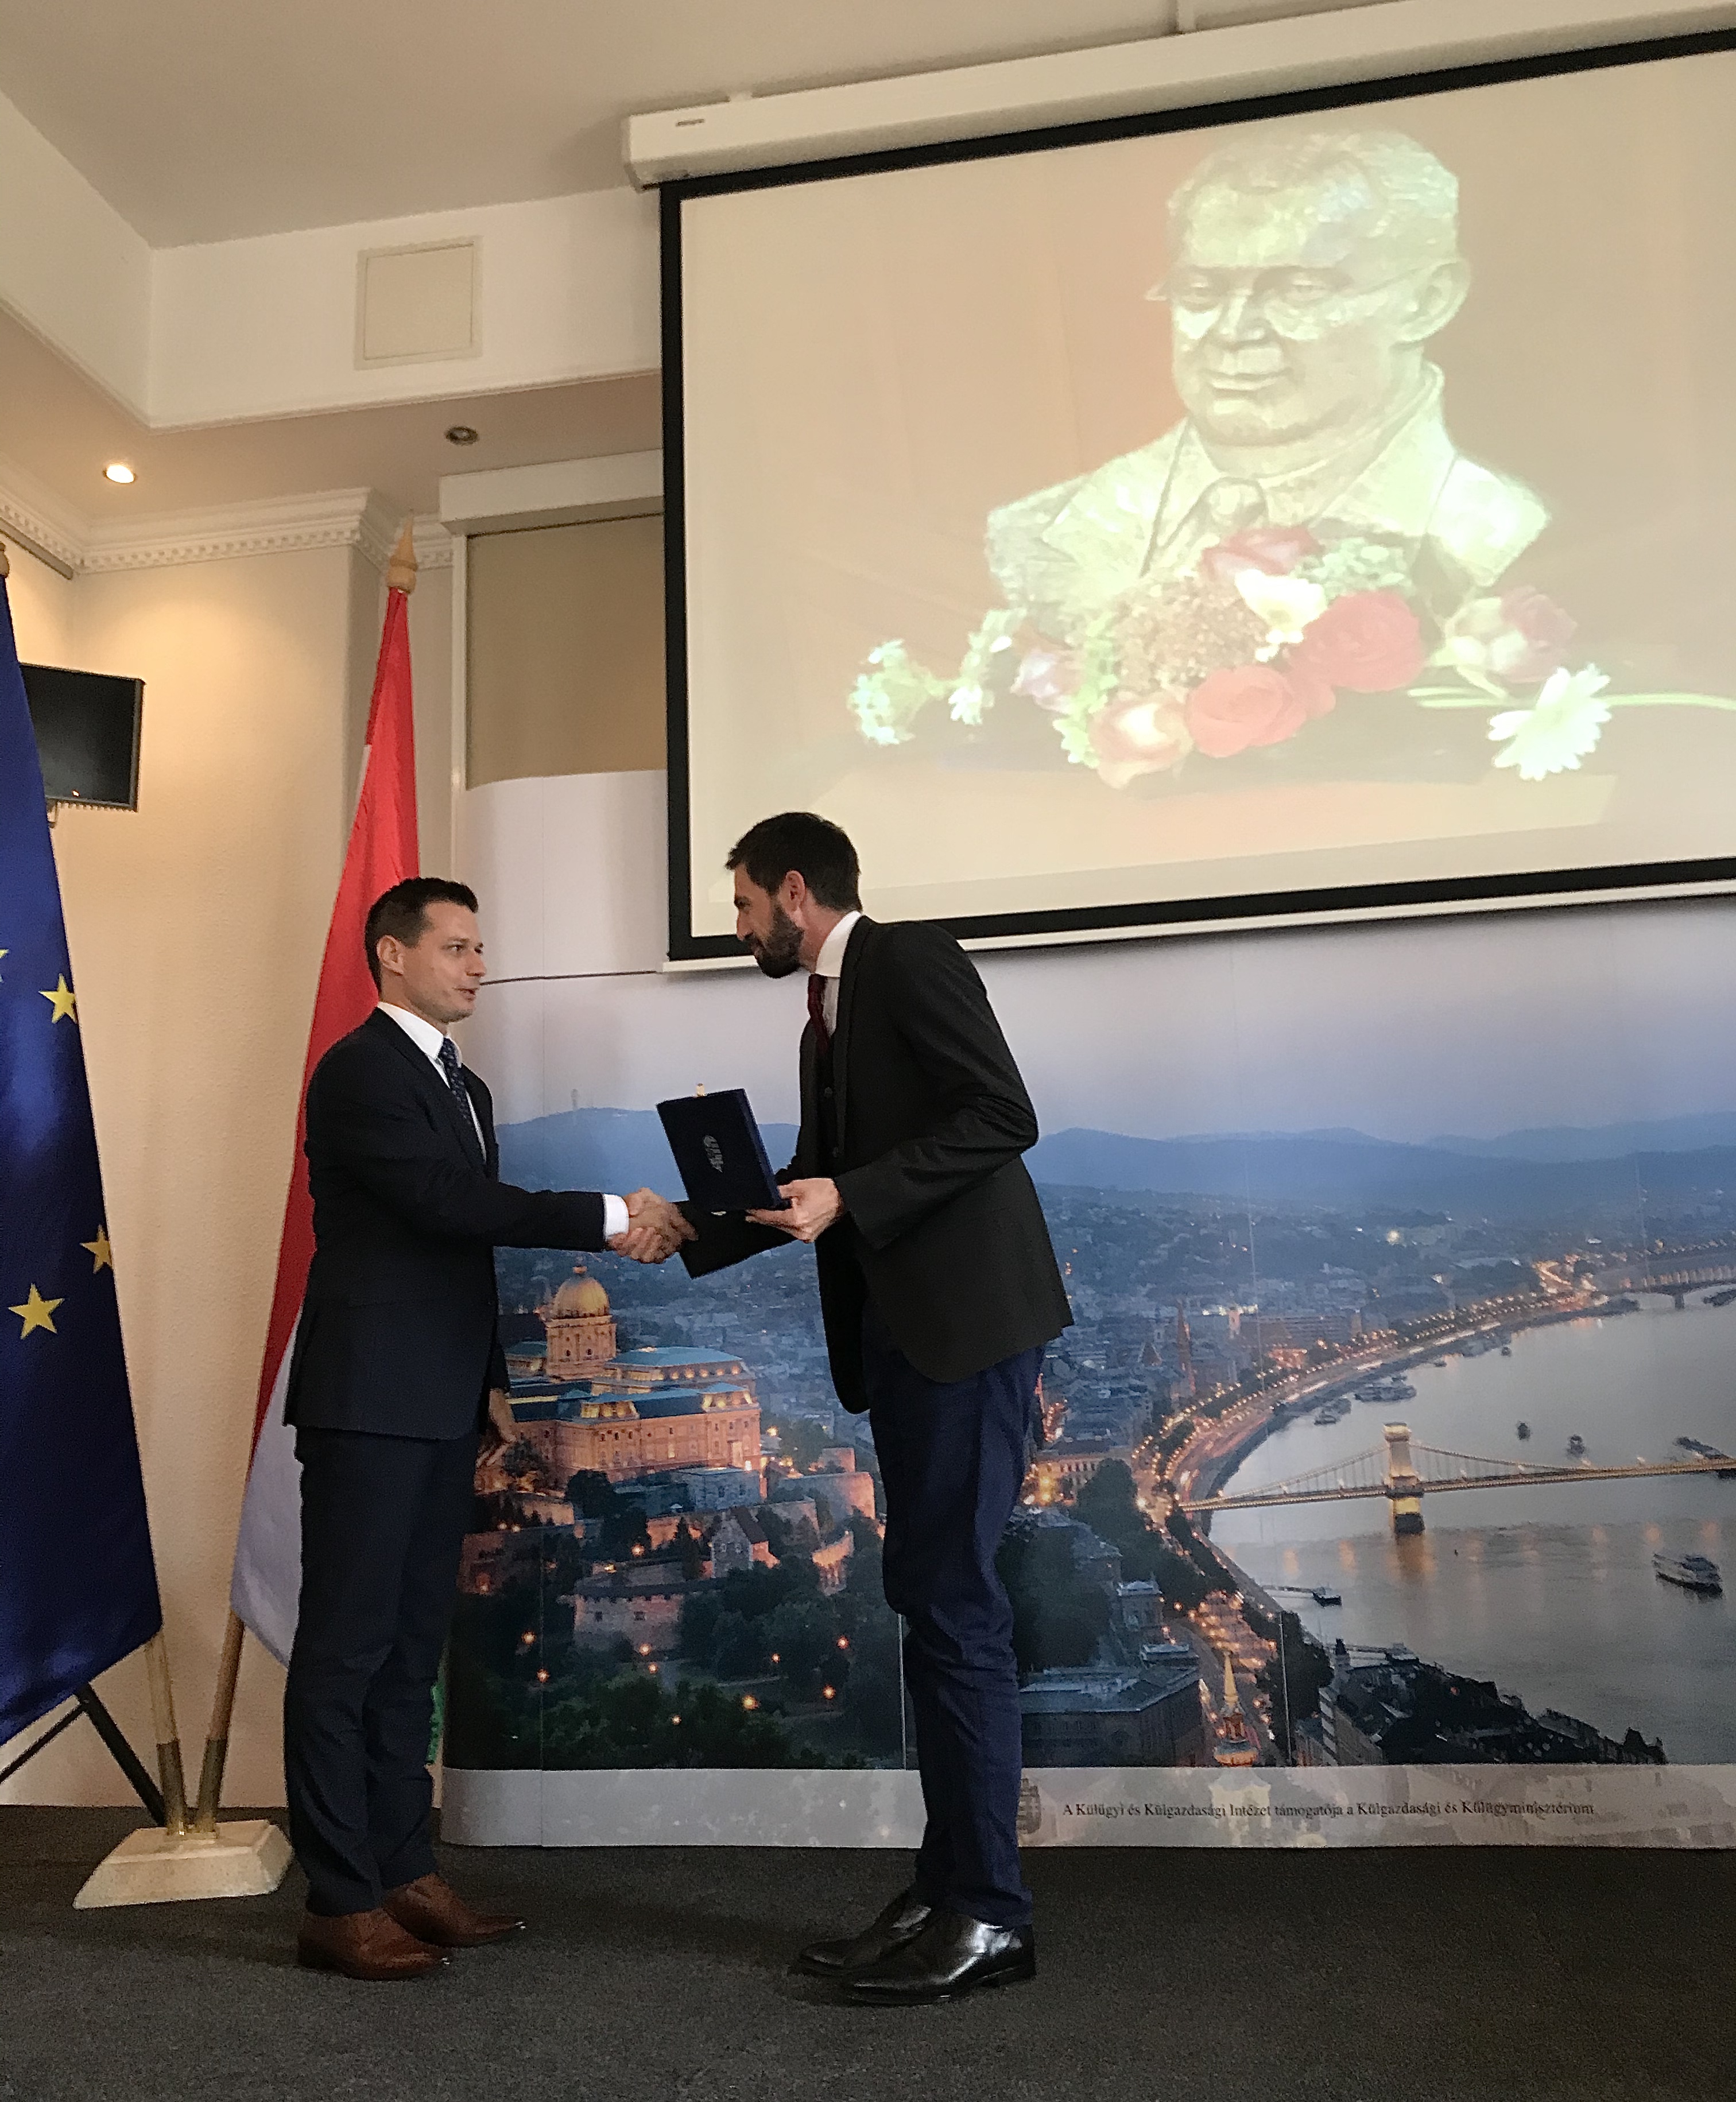 Pálfi István award to our colleague, Silvester Holop